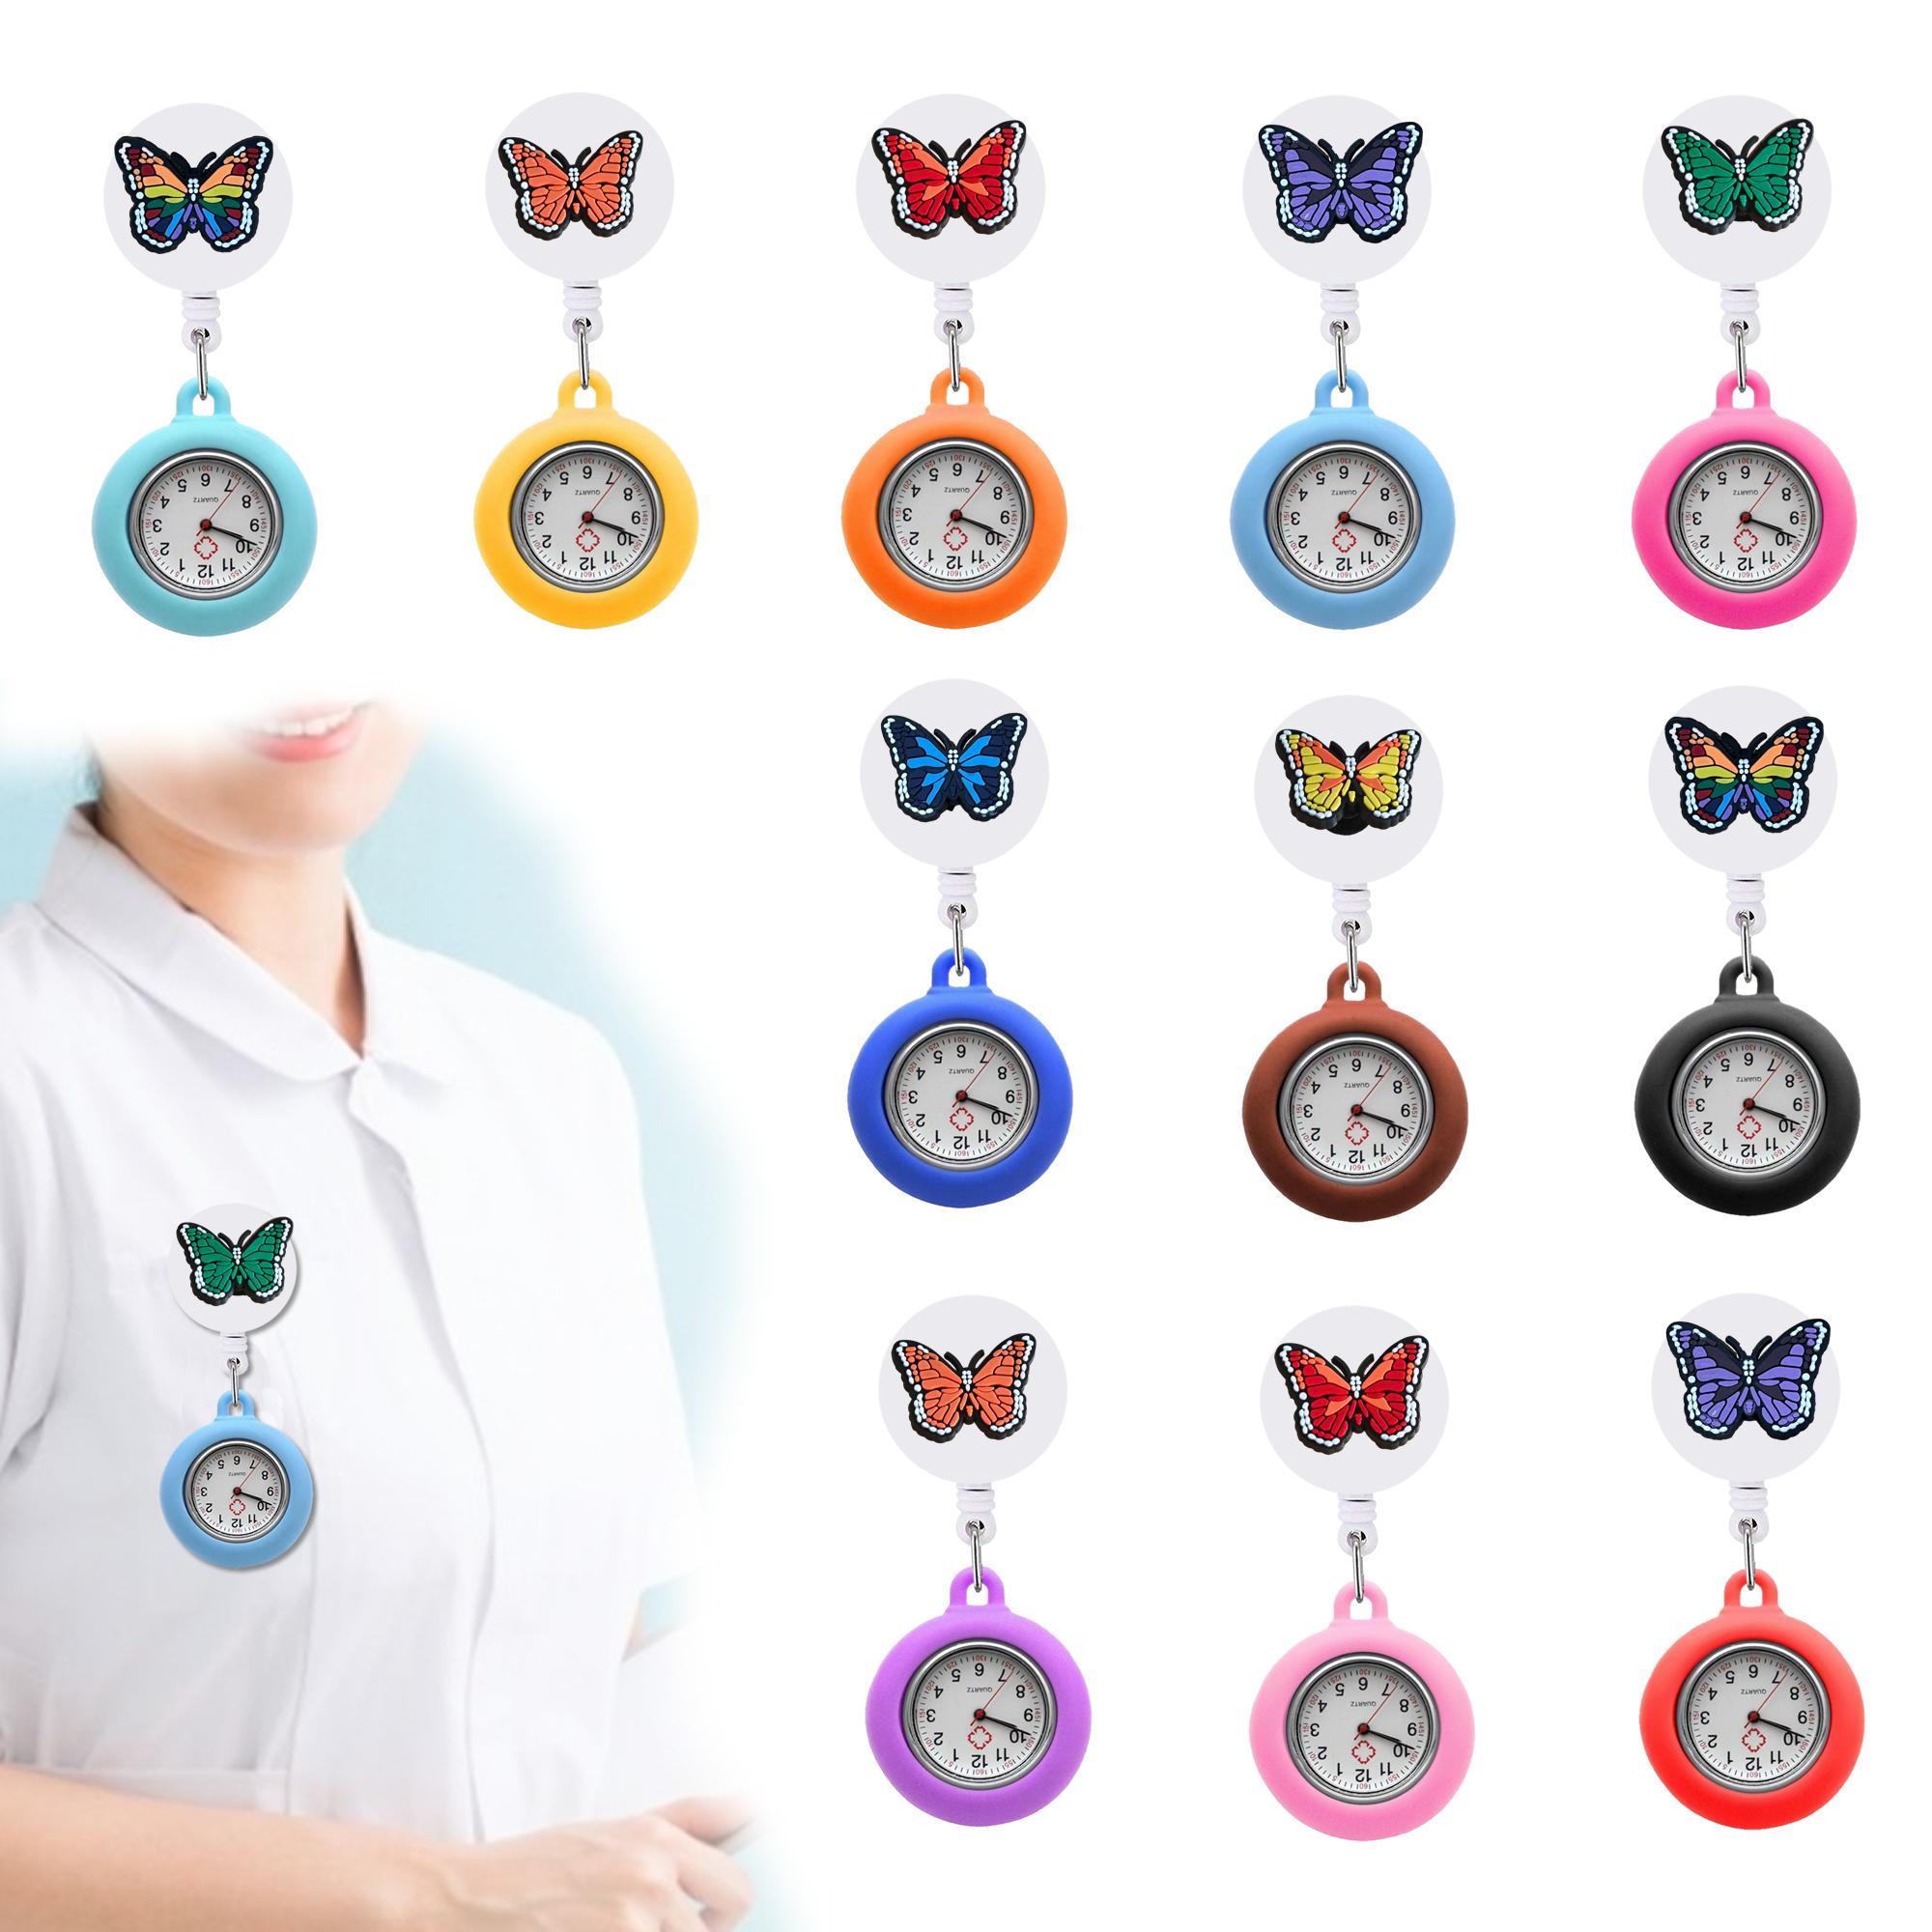 Charms Butterfly Clip Pocket Watches Fob Hang Medicine Clock Nurse Watch on Watche For With SILE CASE RÉTRACTIVE CADEAUX ÉTUDIANTS DROP D OTTUH